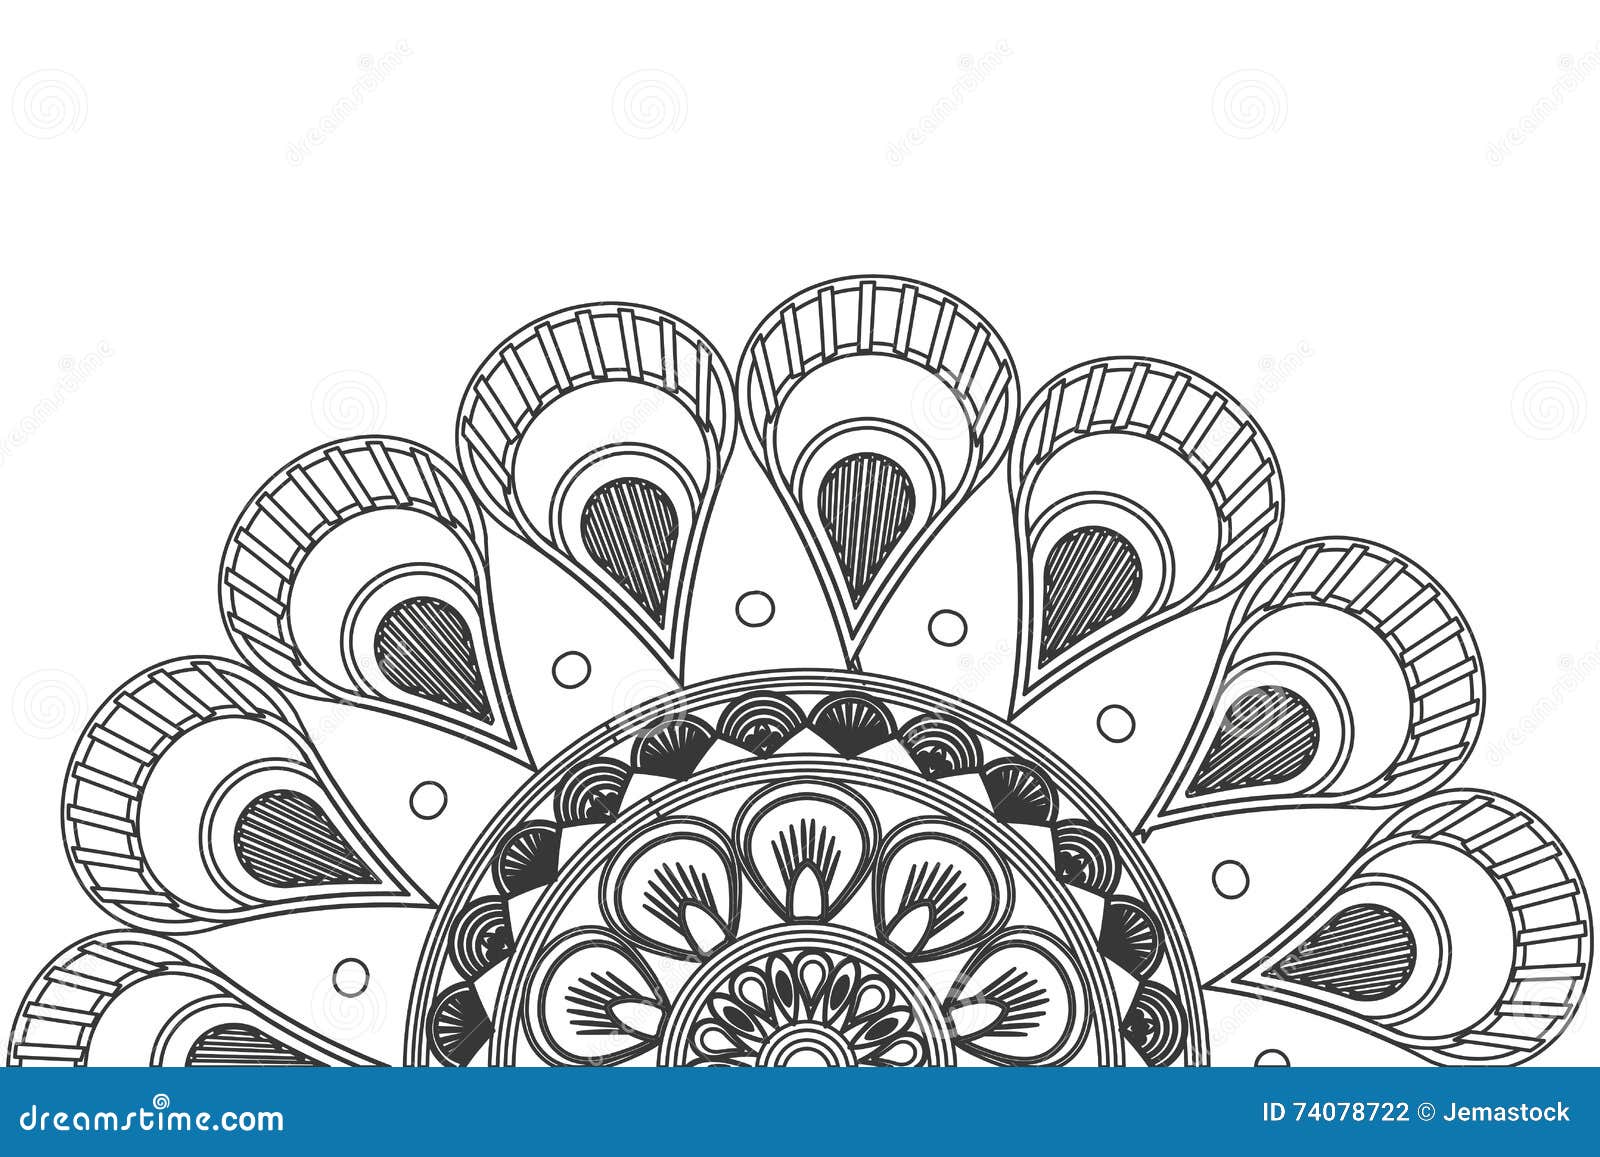 Download Circular Decorative Line Half Mandala Icon Stock ...